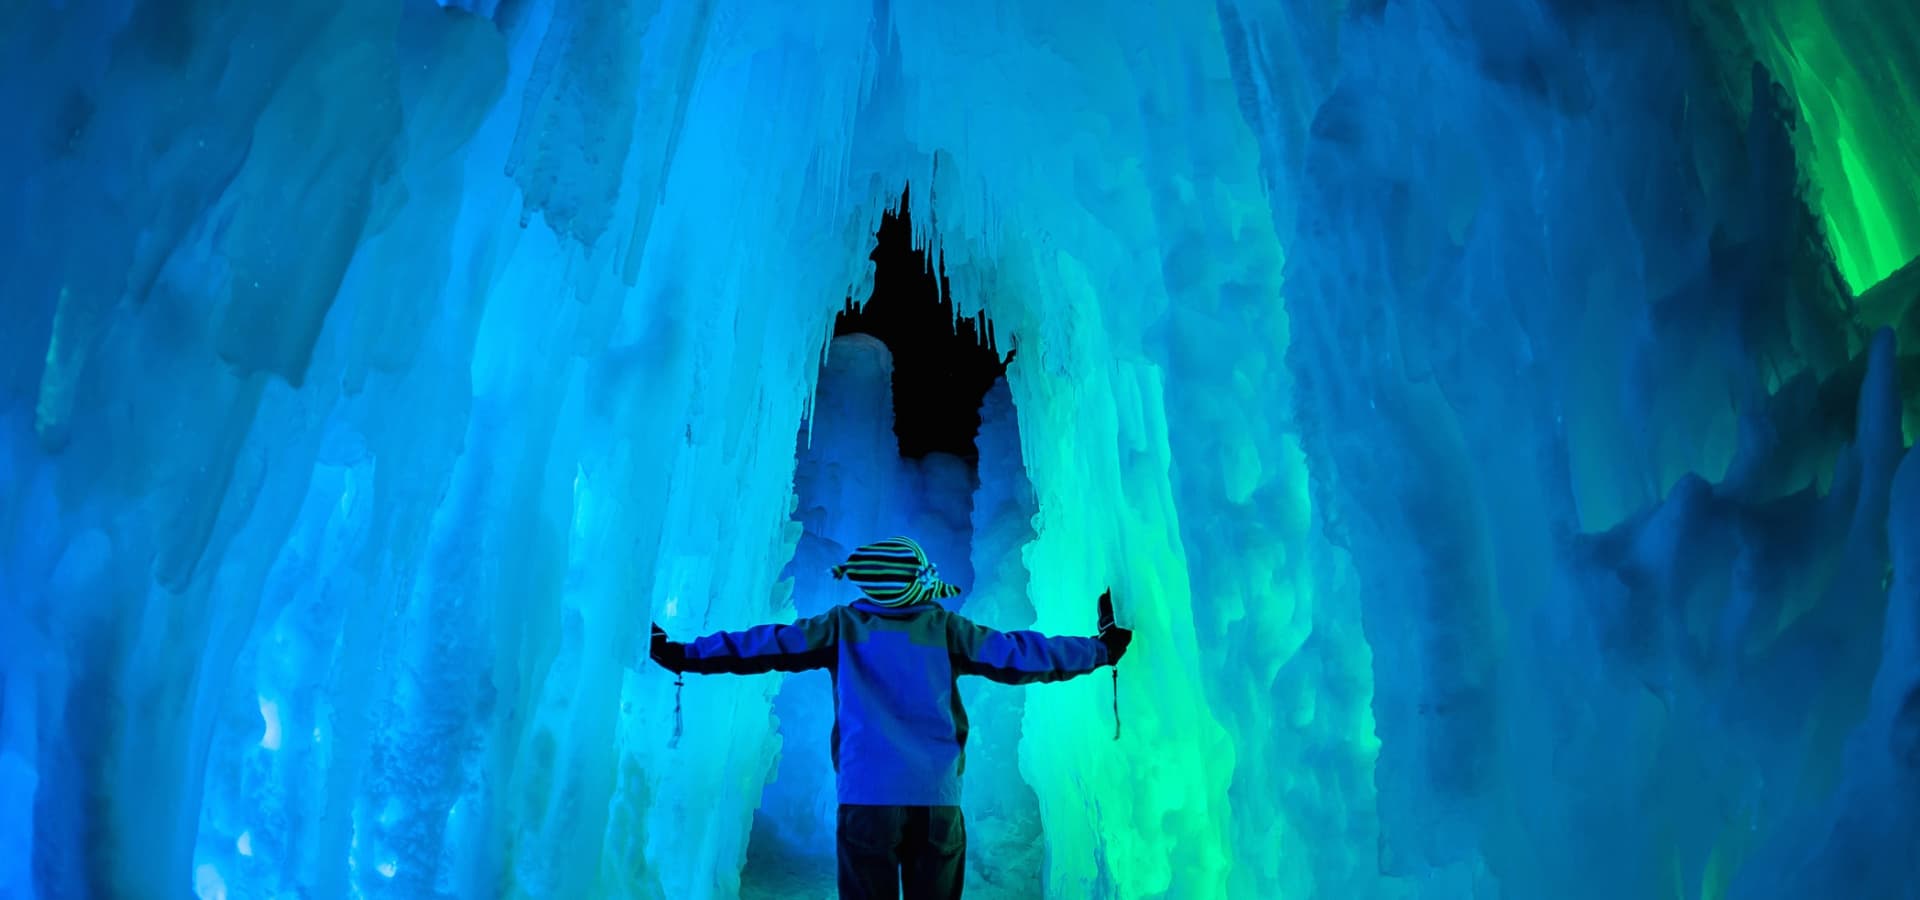 Little boy walking through ice castles